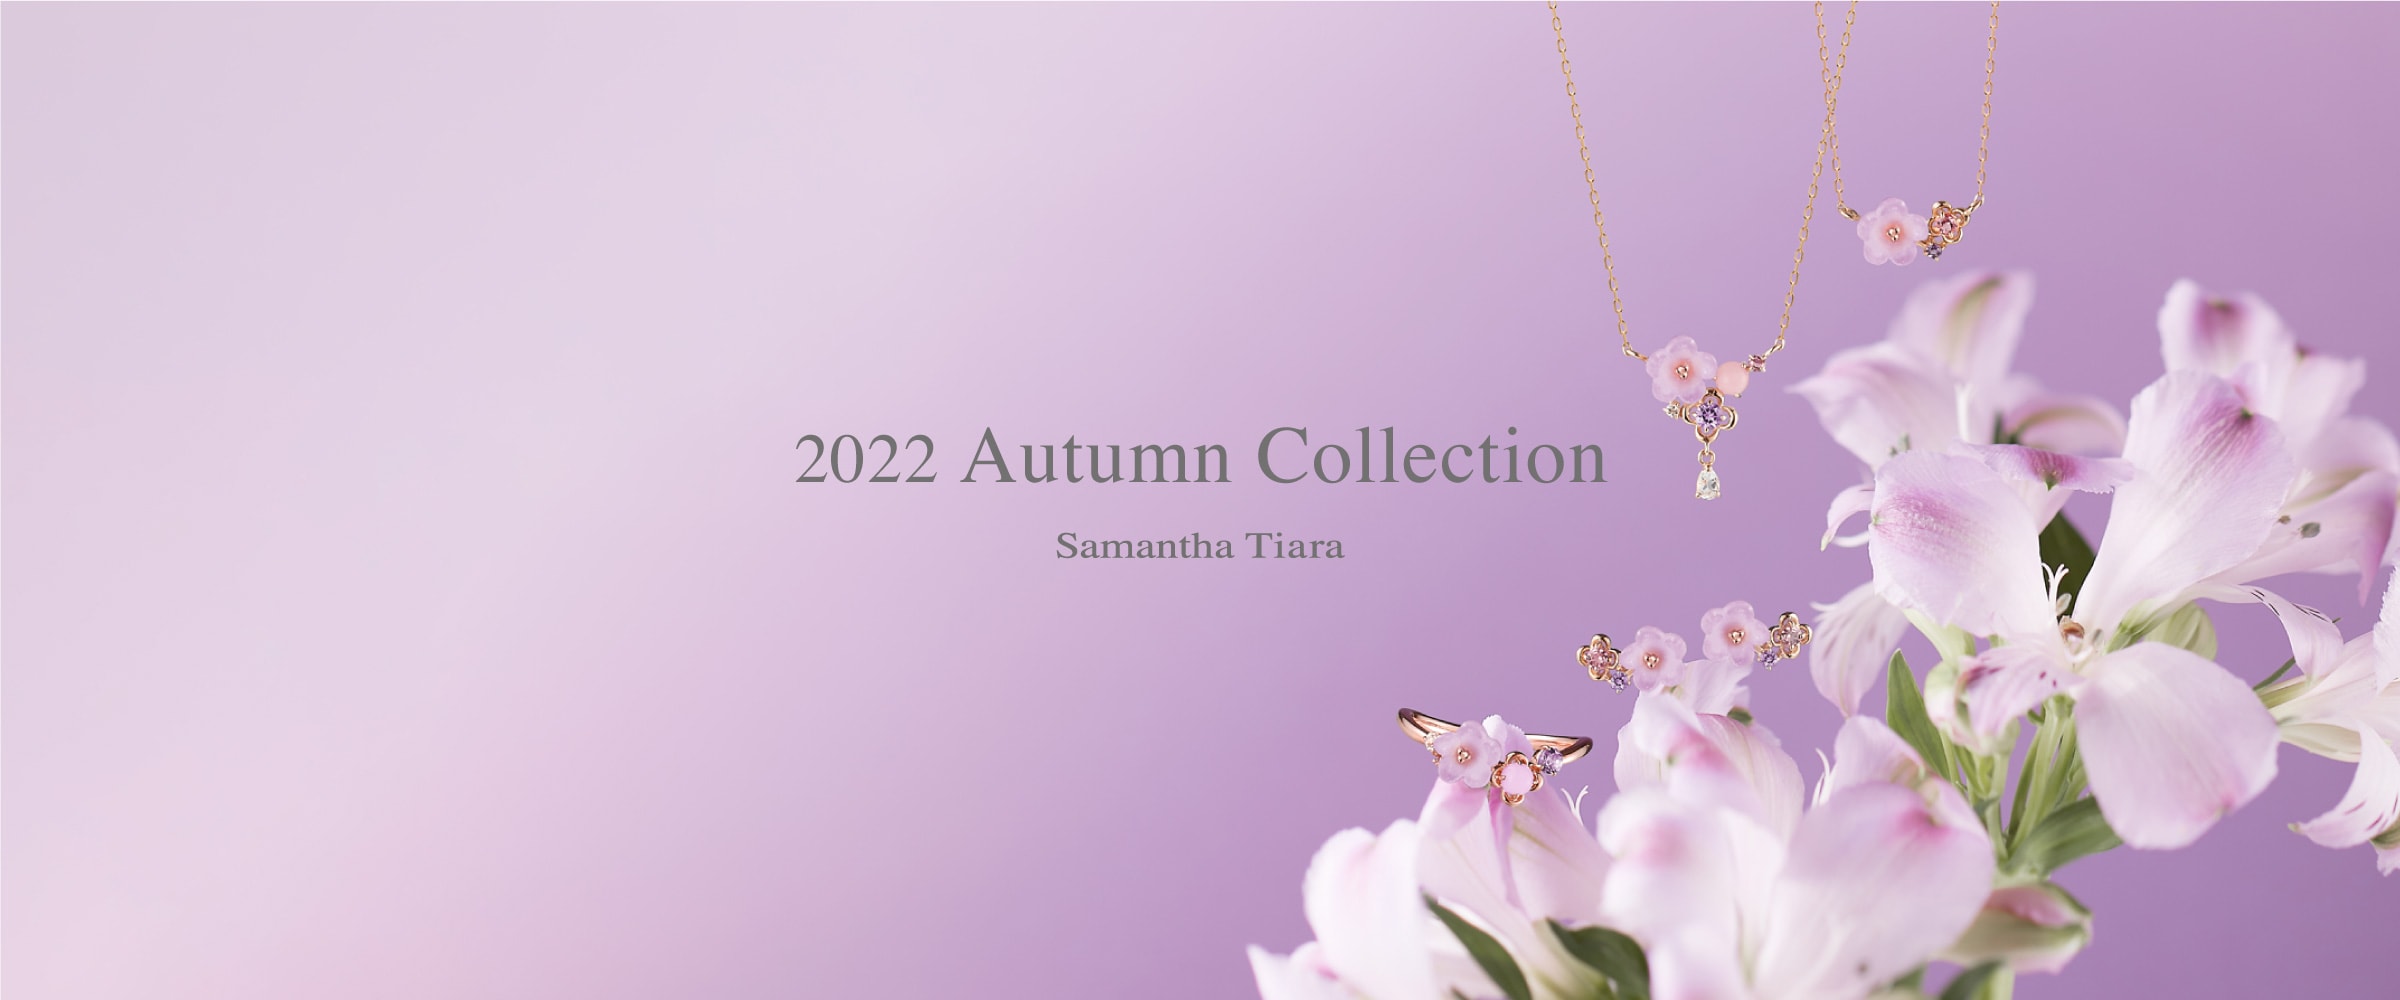 Samantha Tiara 2022 Autumn Collection